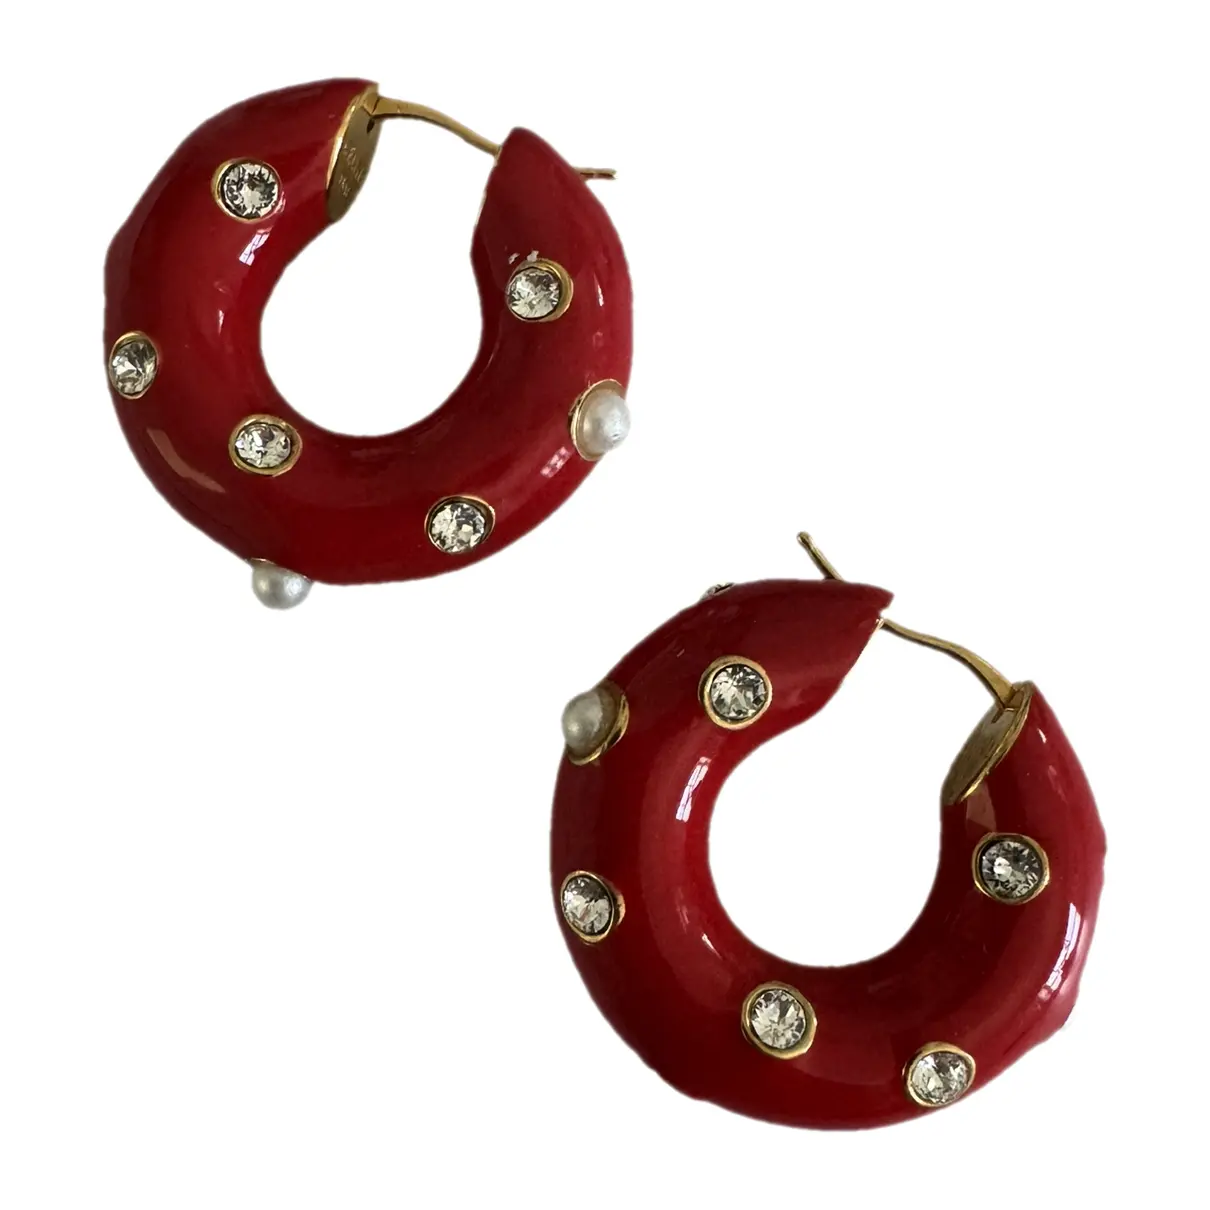 Baroque earrings